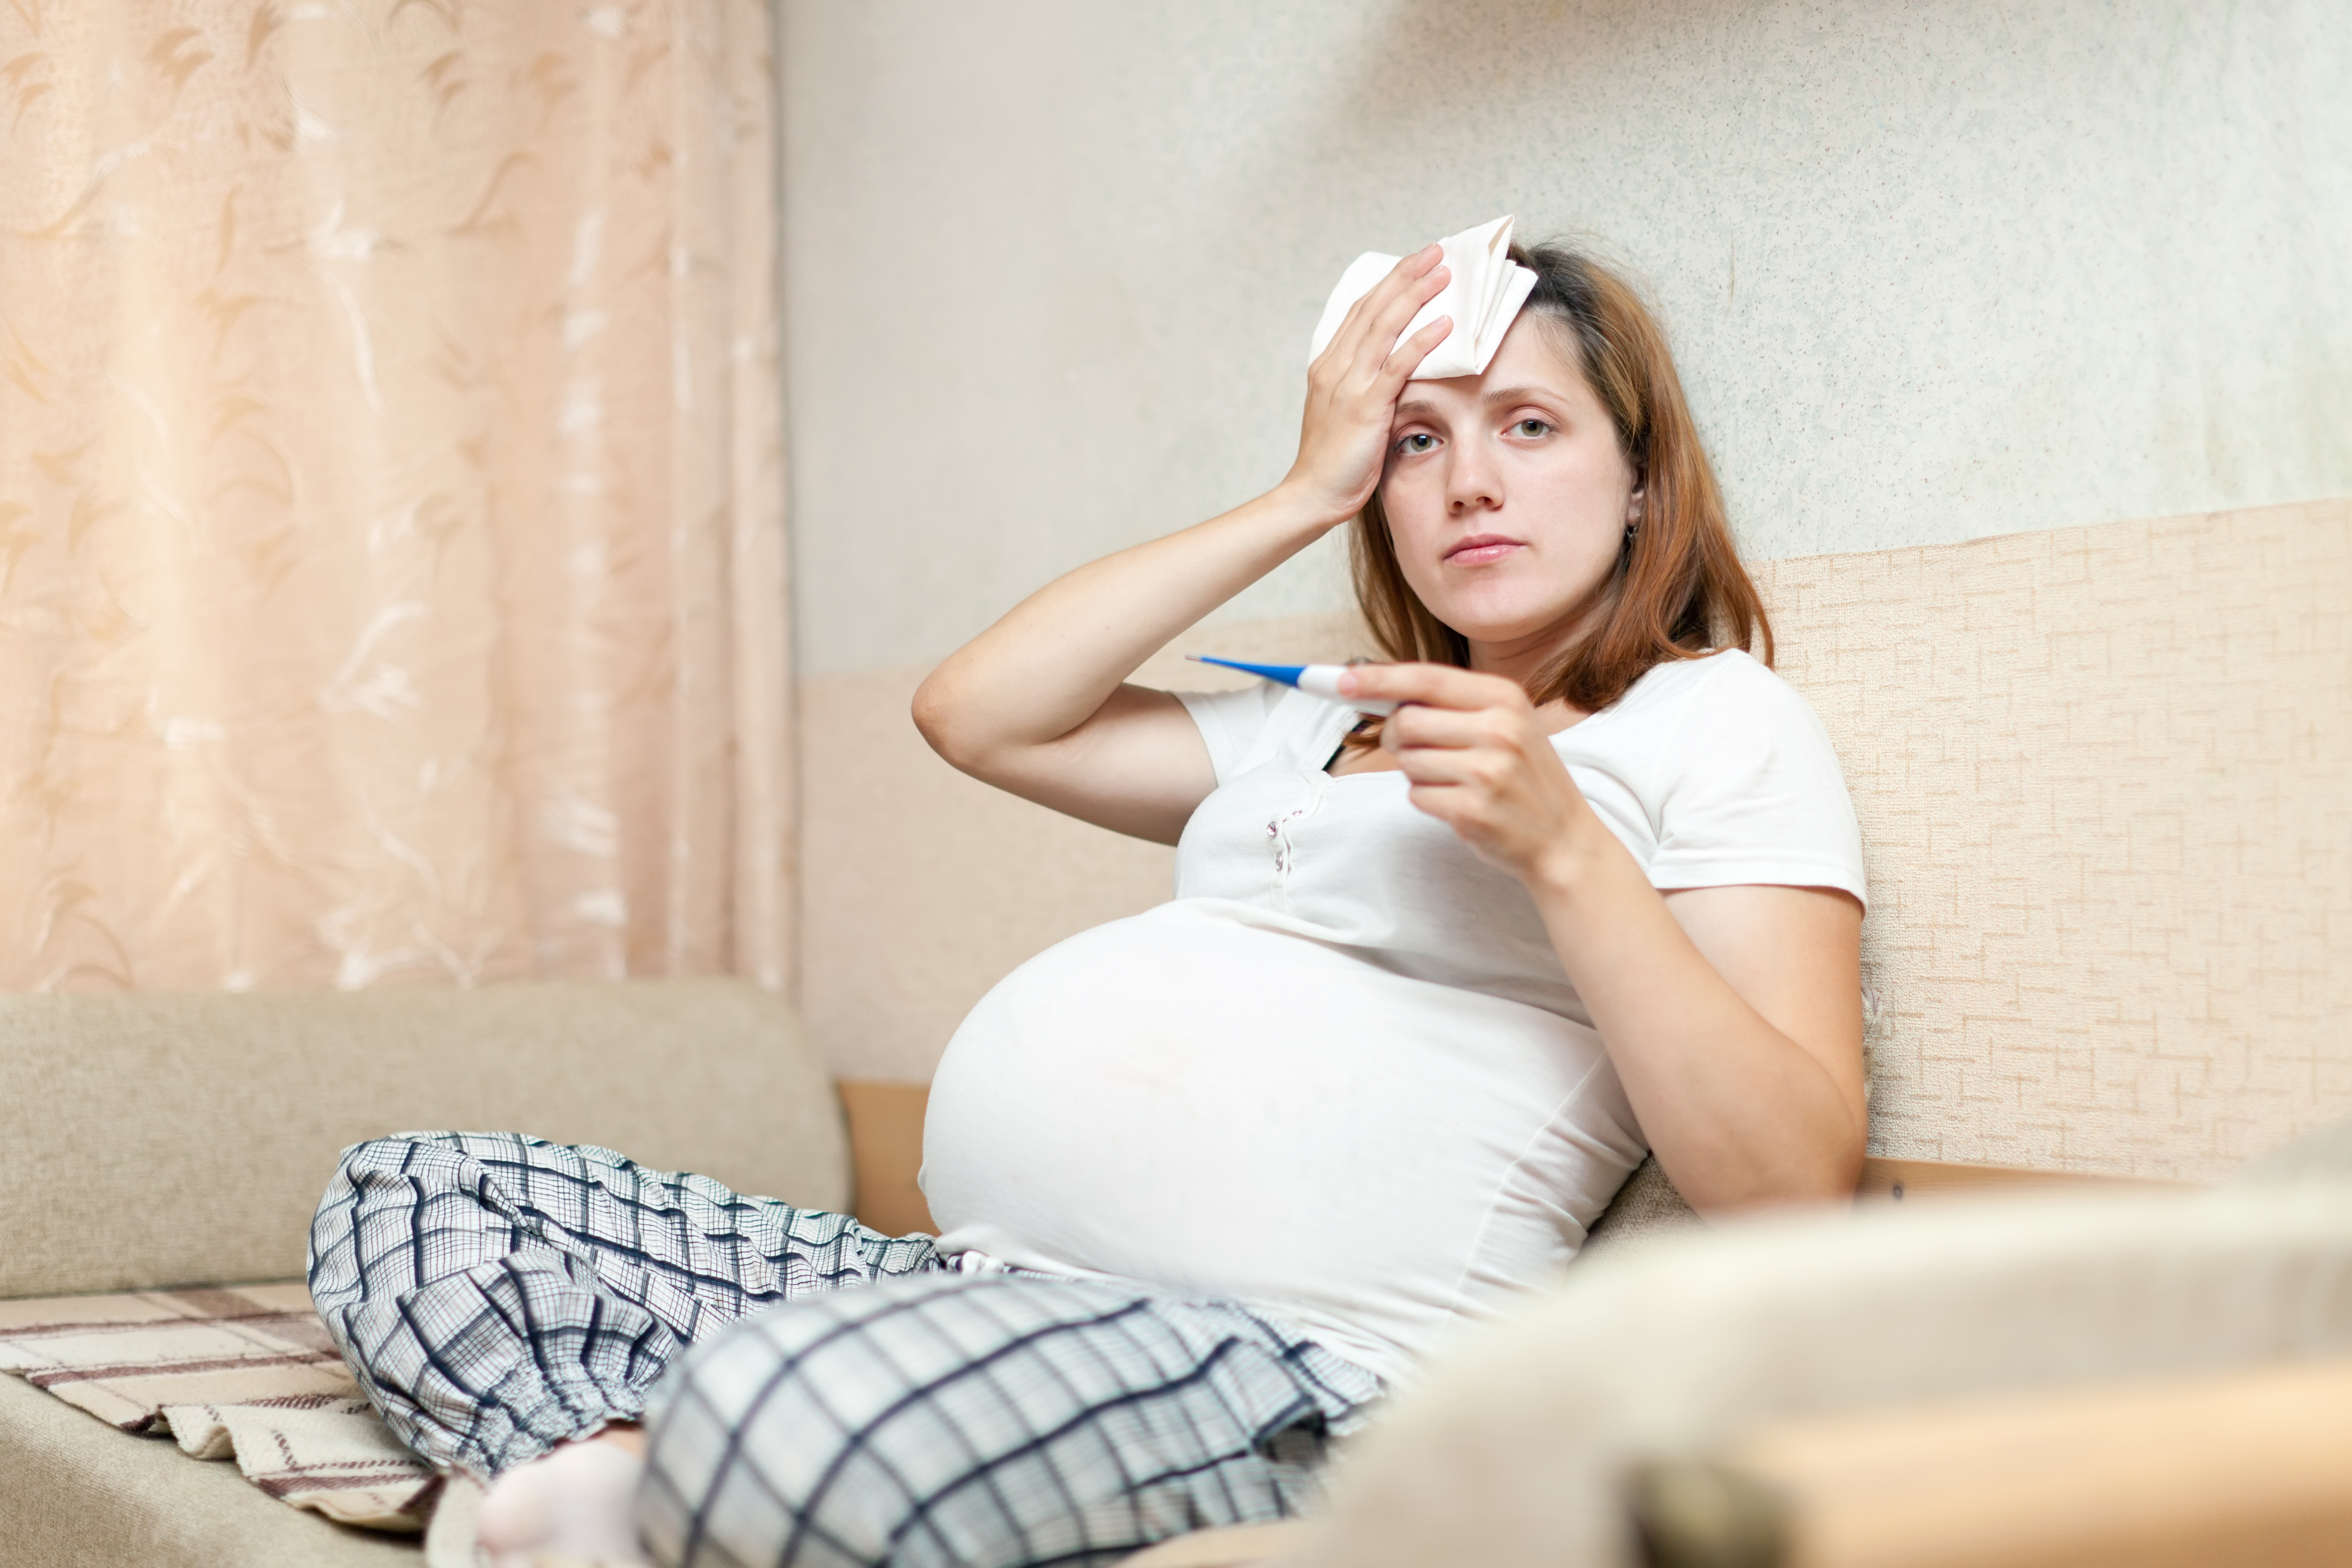 Sleeping during Pregnancy